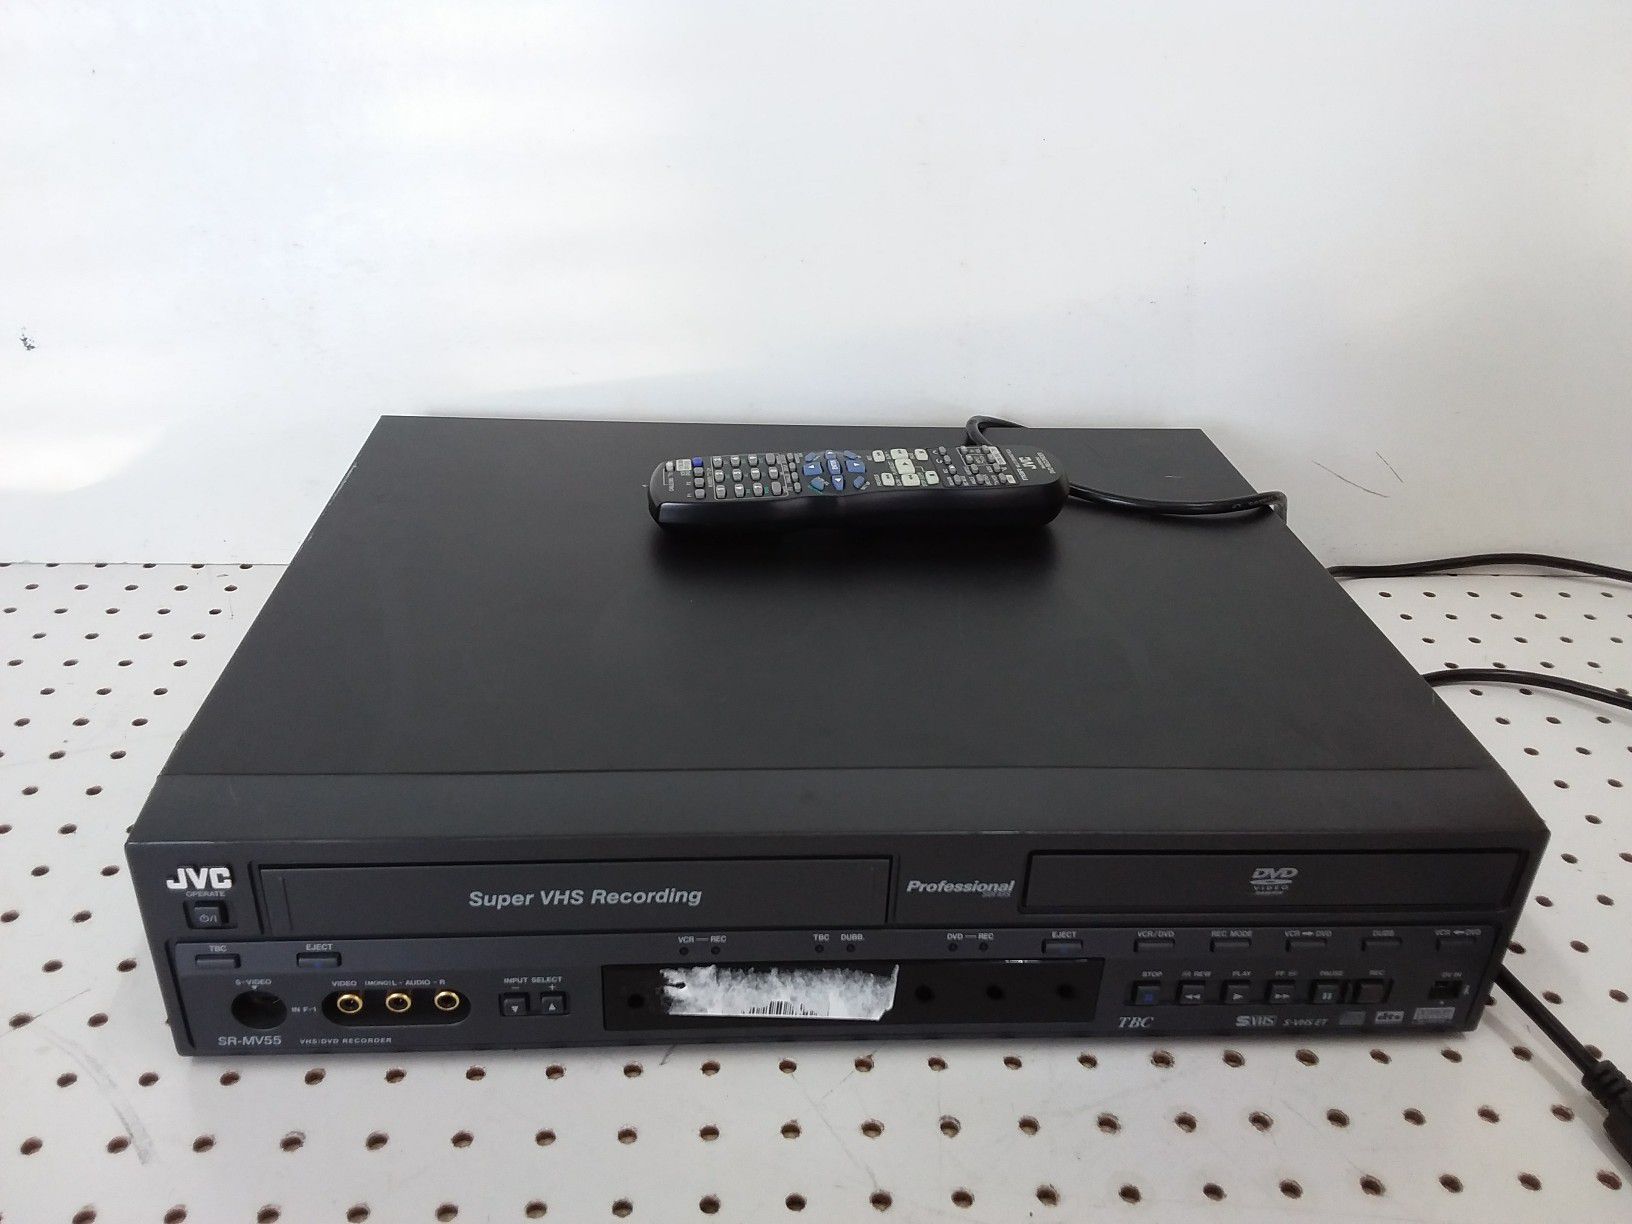 JVC VHS DVD recorder SR-MV55 professional black with remote